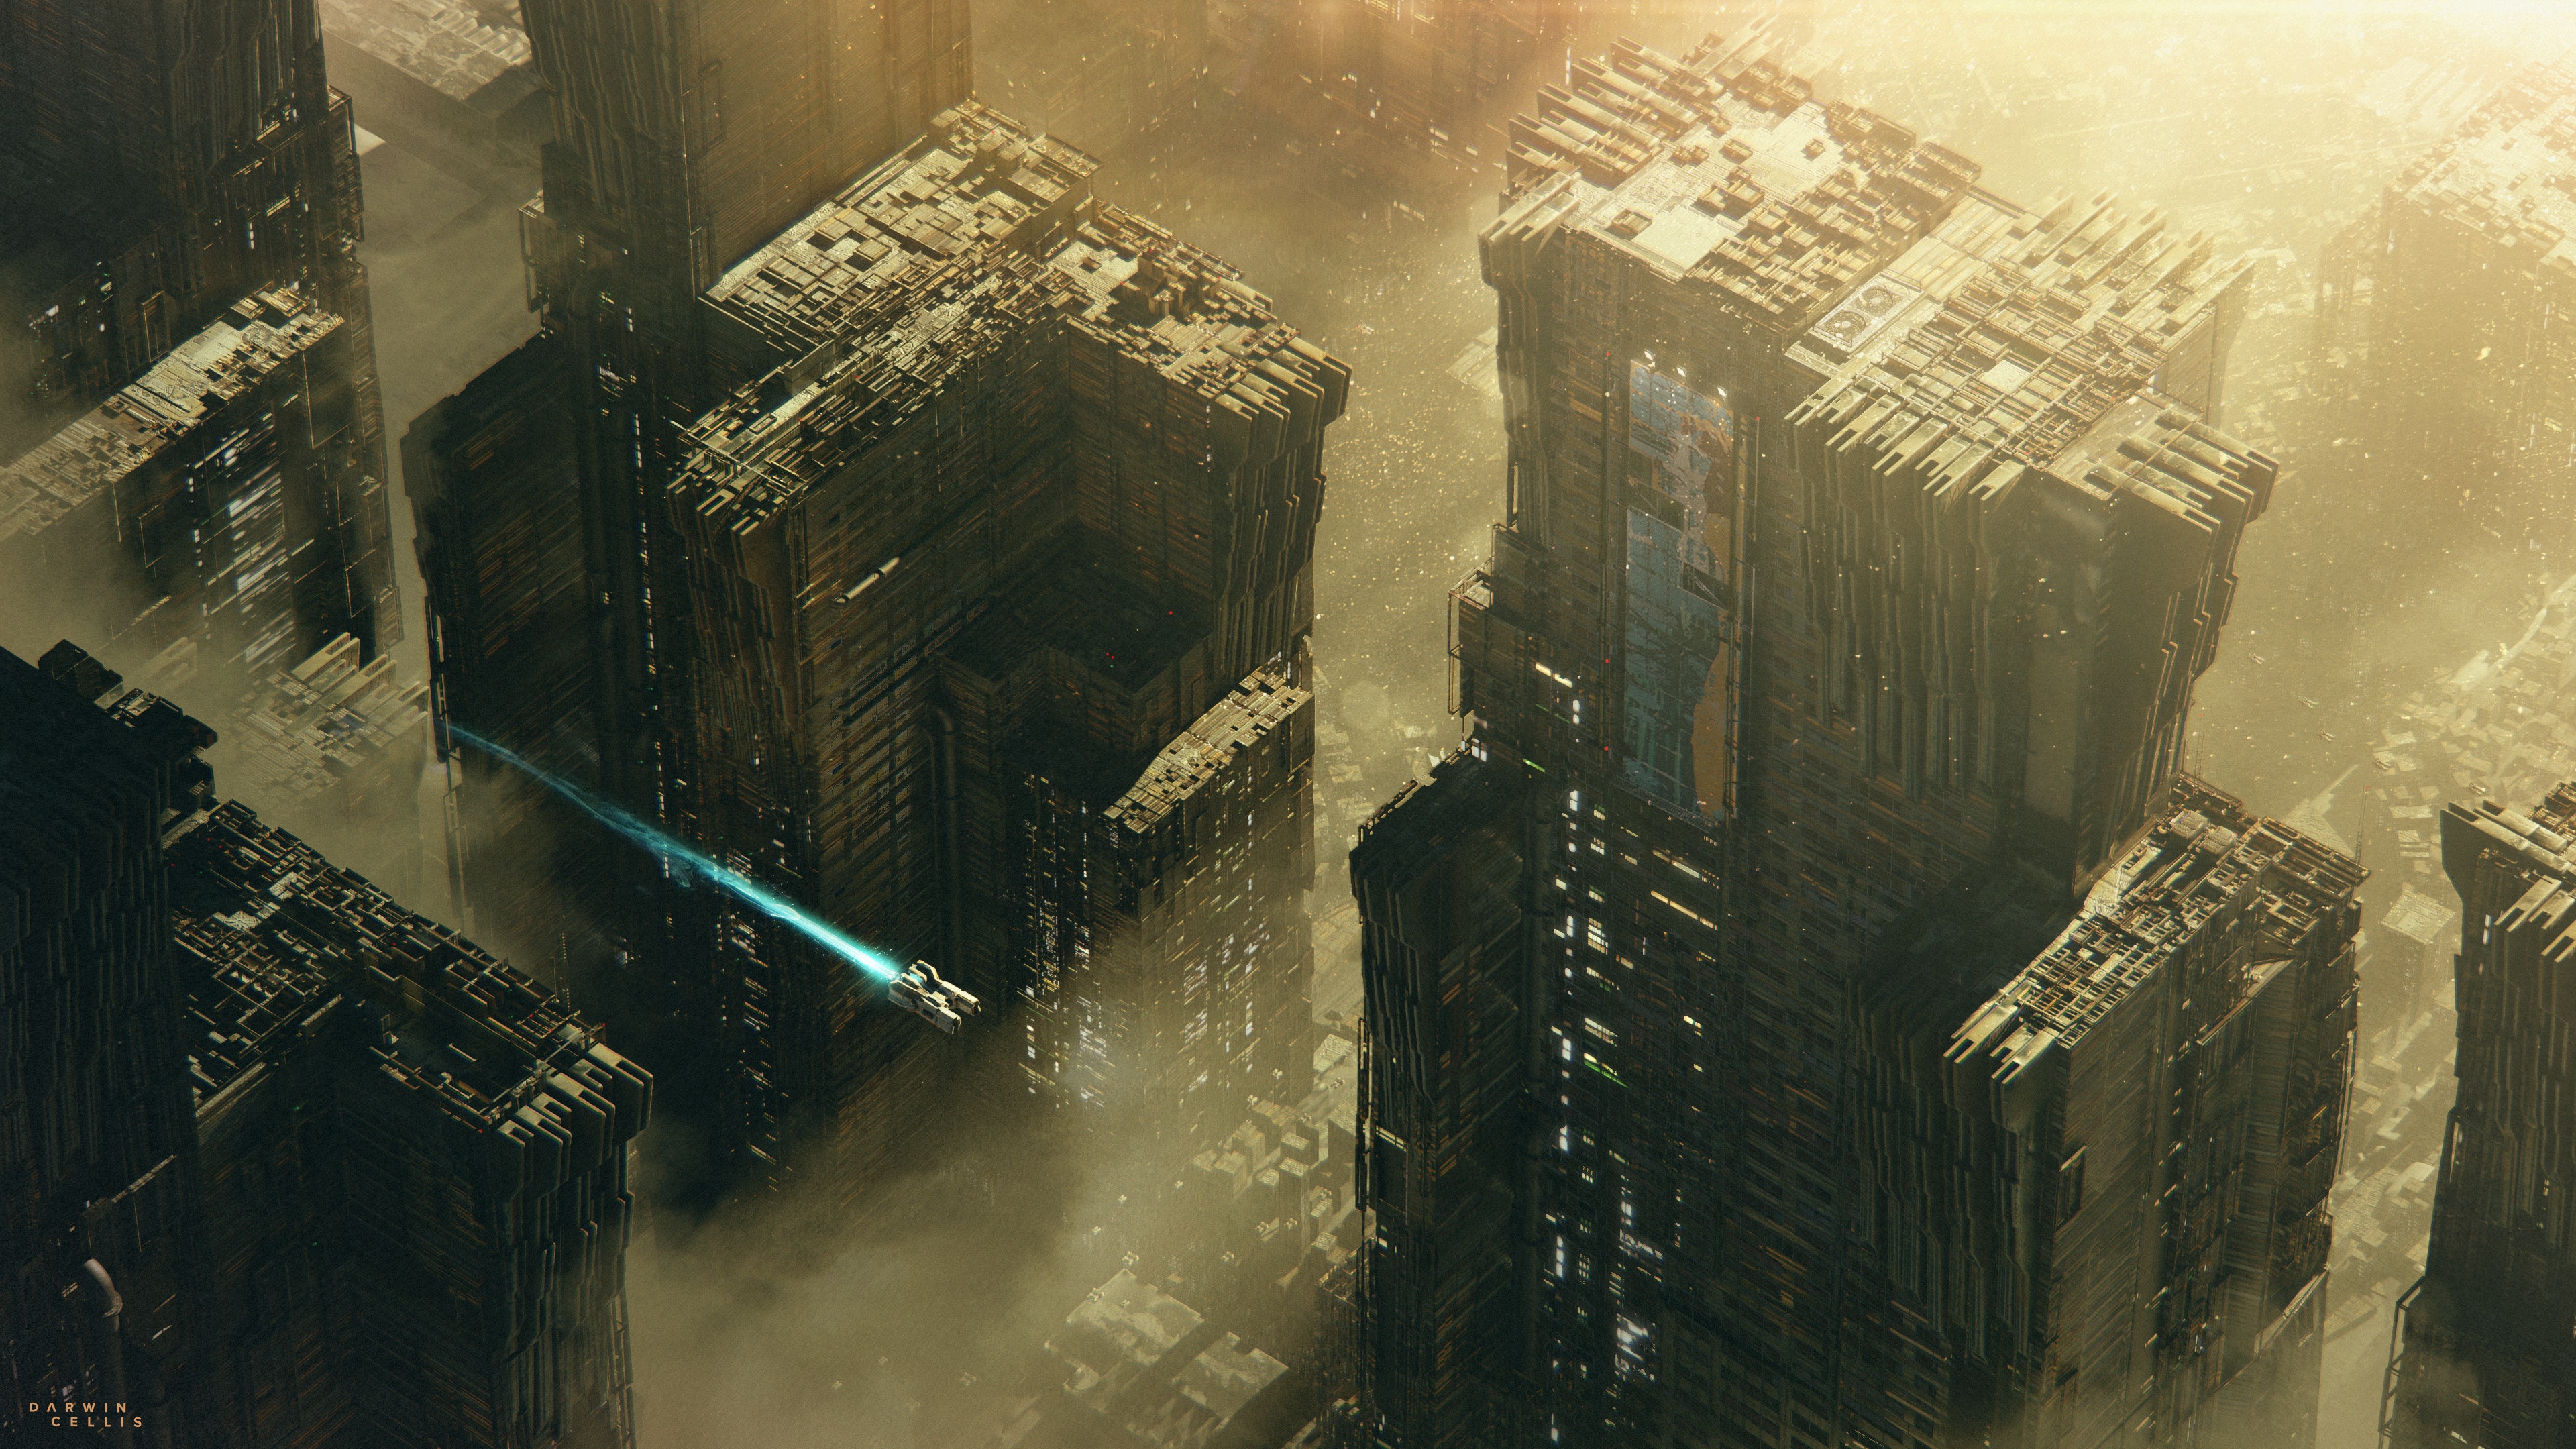 General 3840x2160 city cityscape futuristic cyberpunk spaceship digital art artwork CGI building architecture science fiction